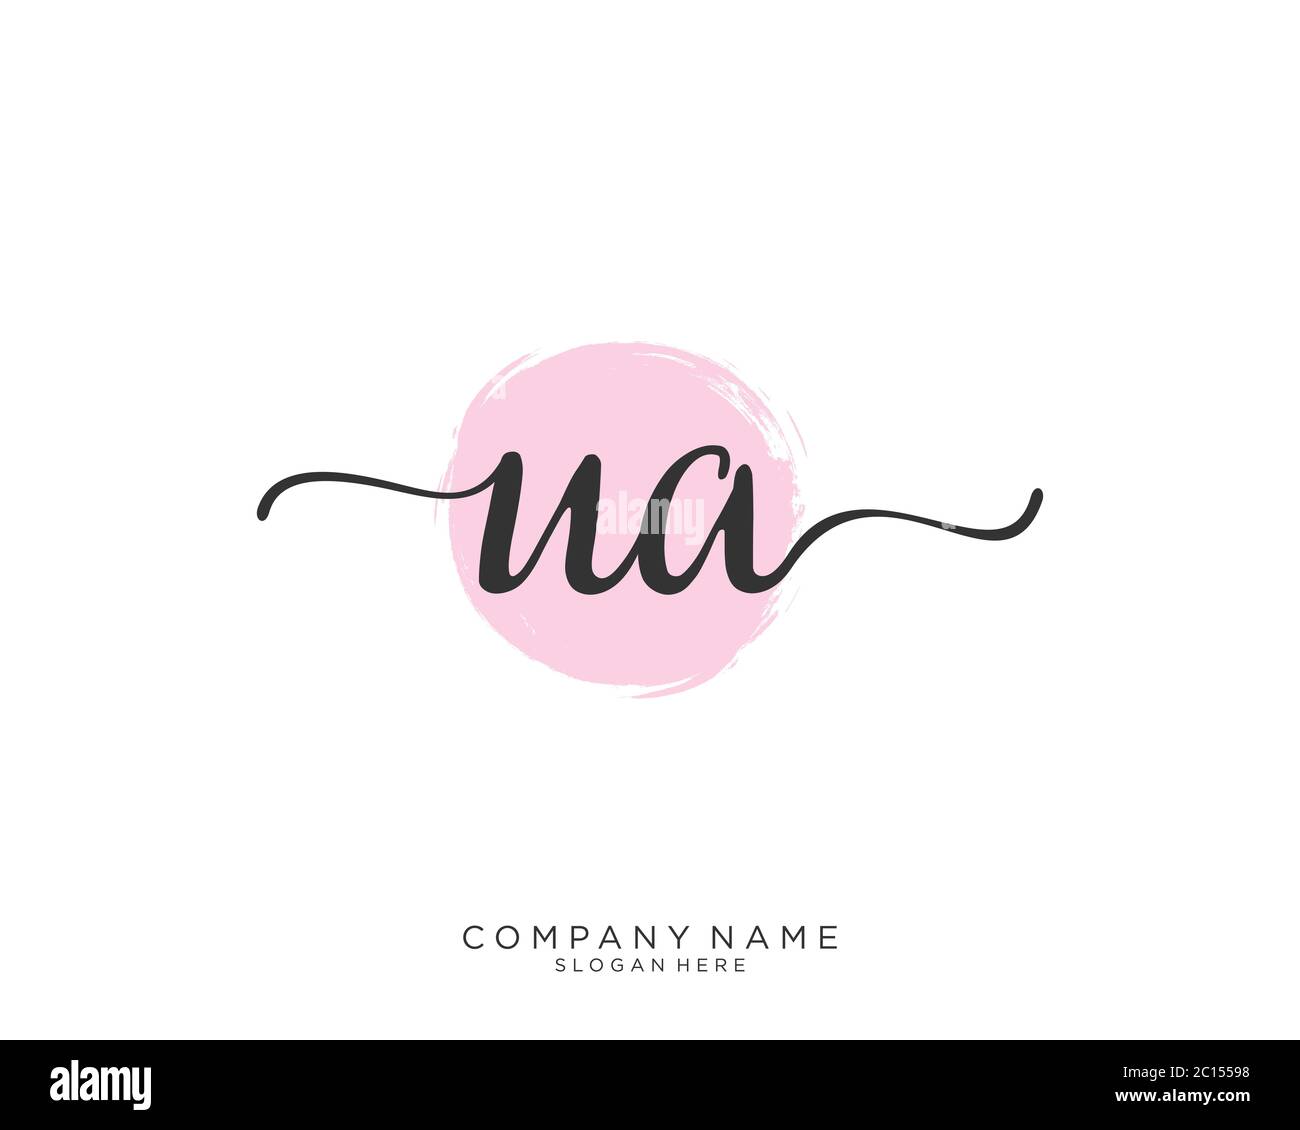 UA Initial handwriting logo vector Stock Vector